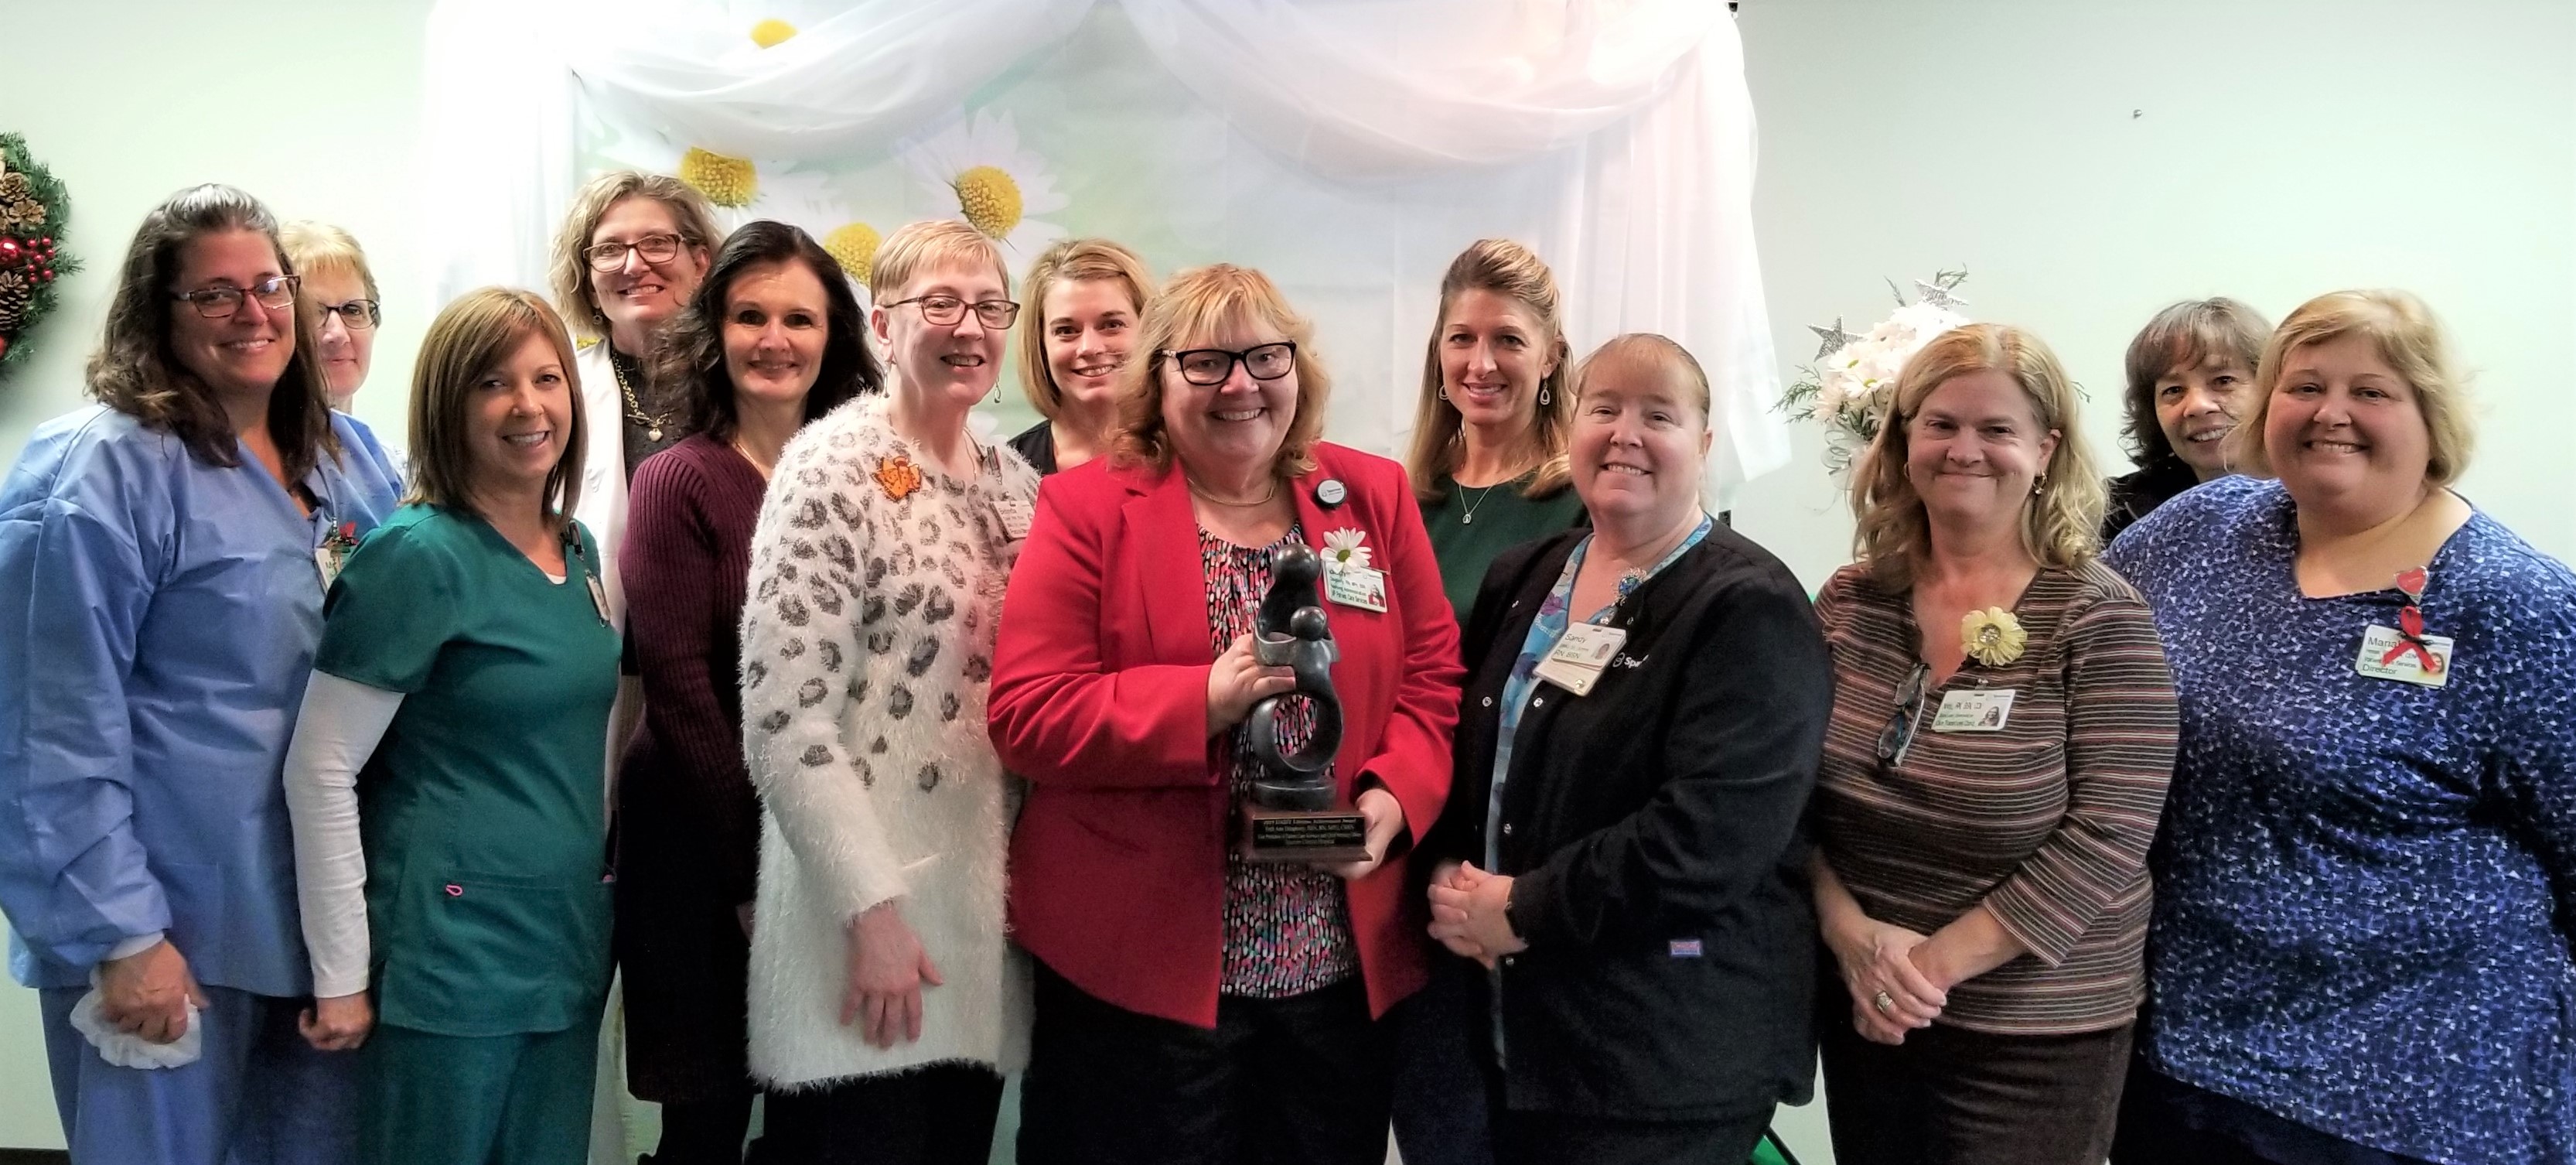 Beth Daugherty celebrated her DAISY Lifetime Achievement Award with Sparrow Clinton Hospital Nurses. The Nursing Team nominated Daugherty for this prestigious, international award of excellence.